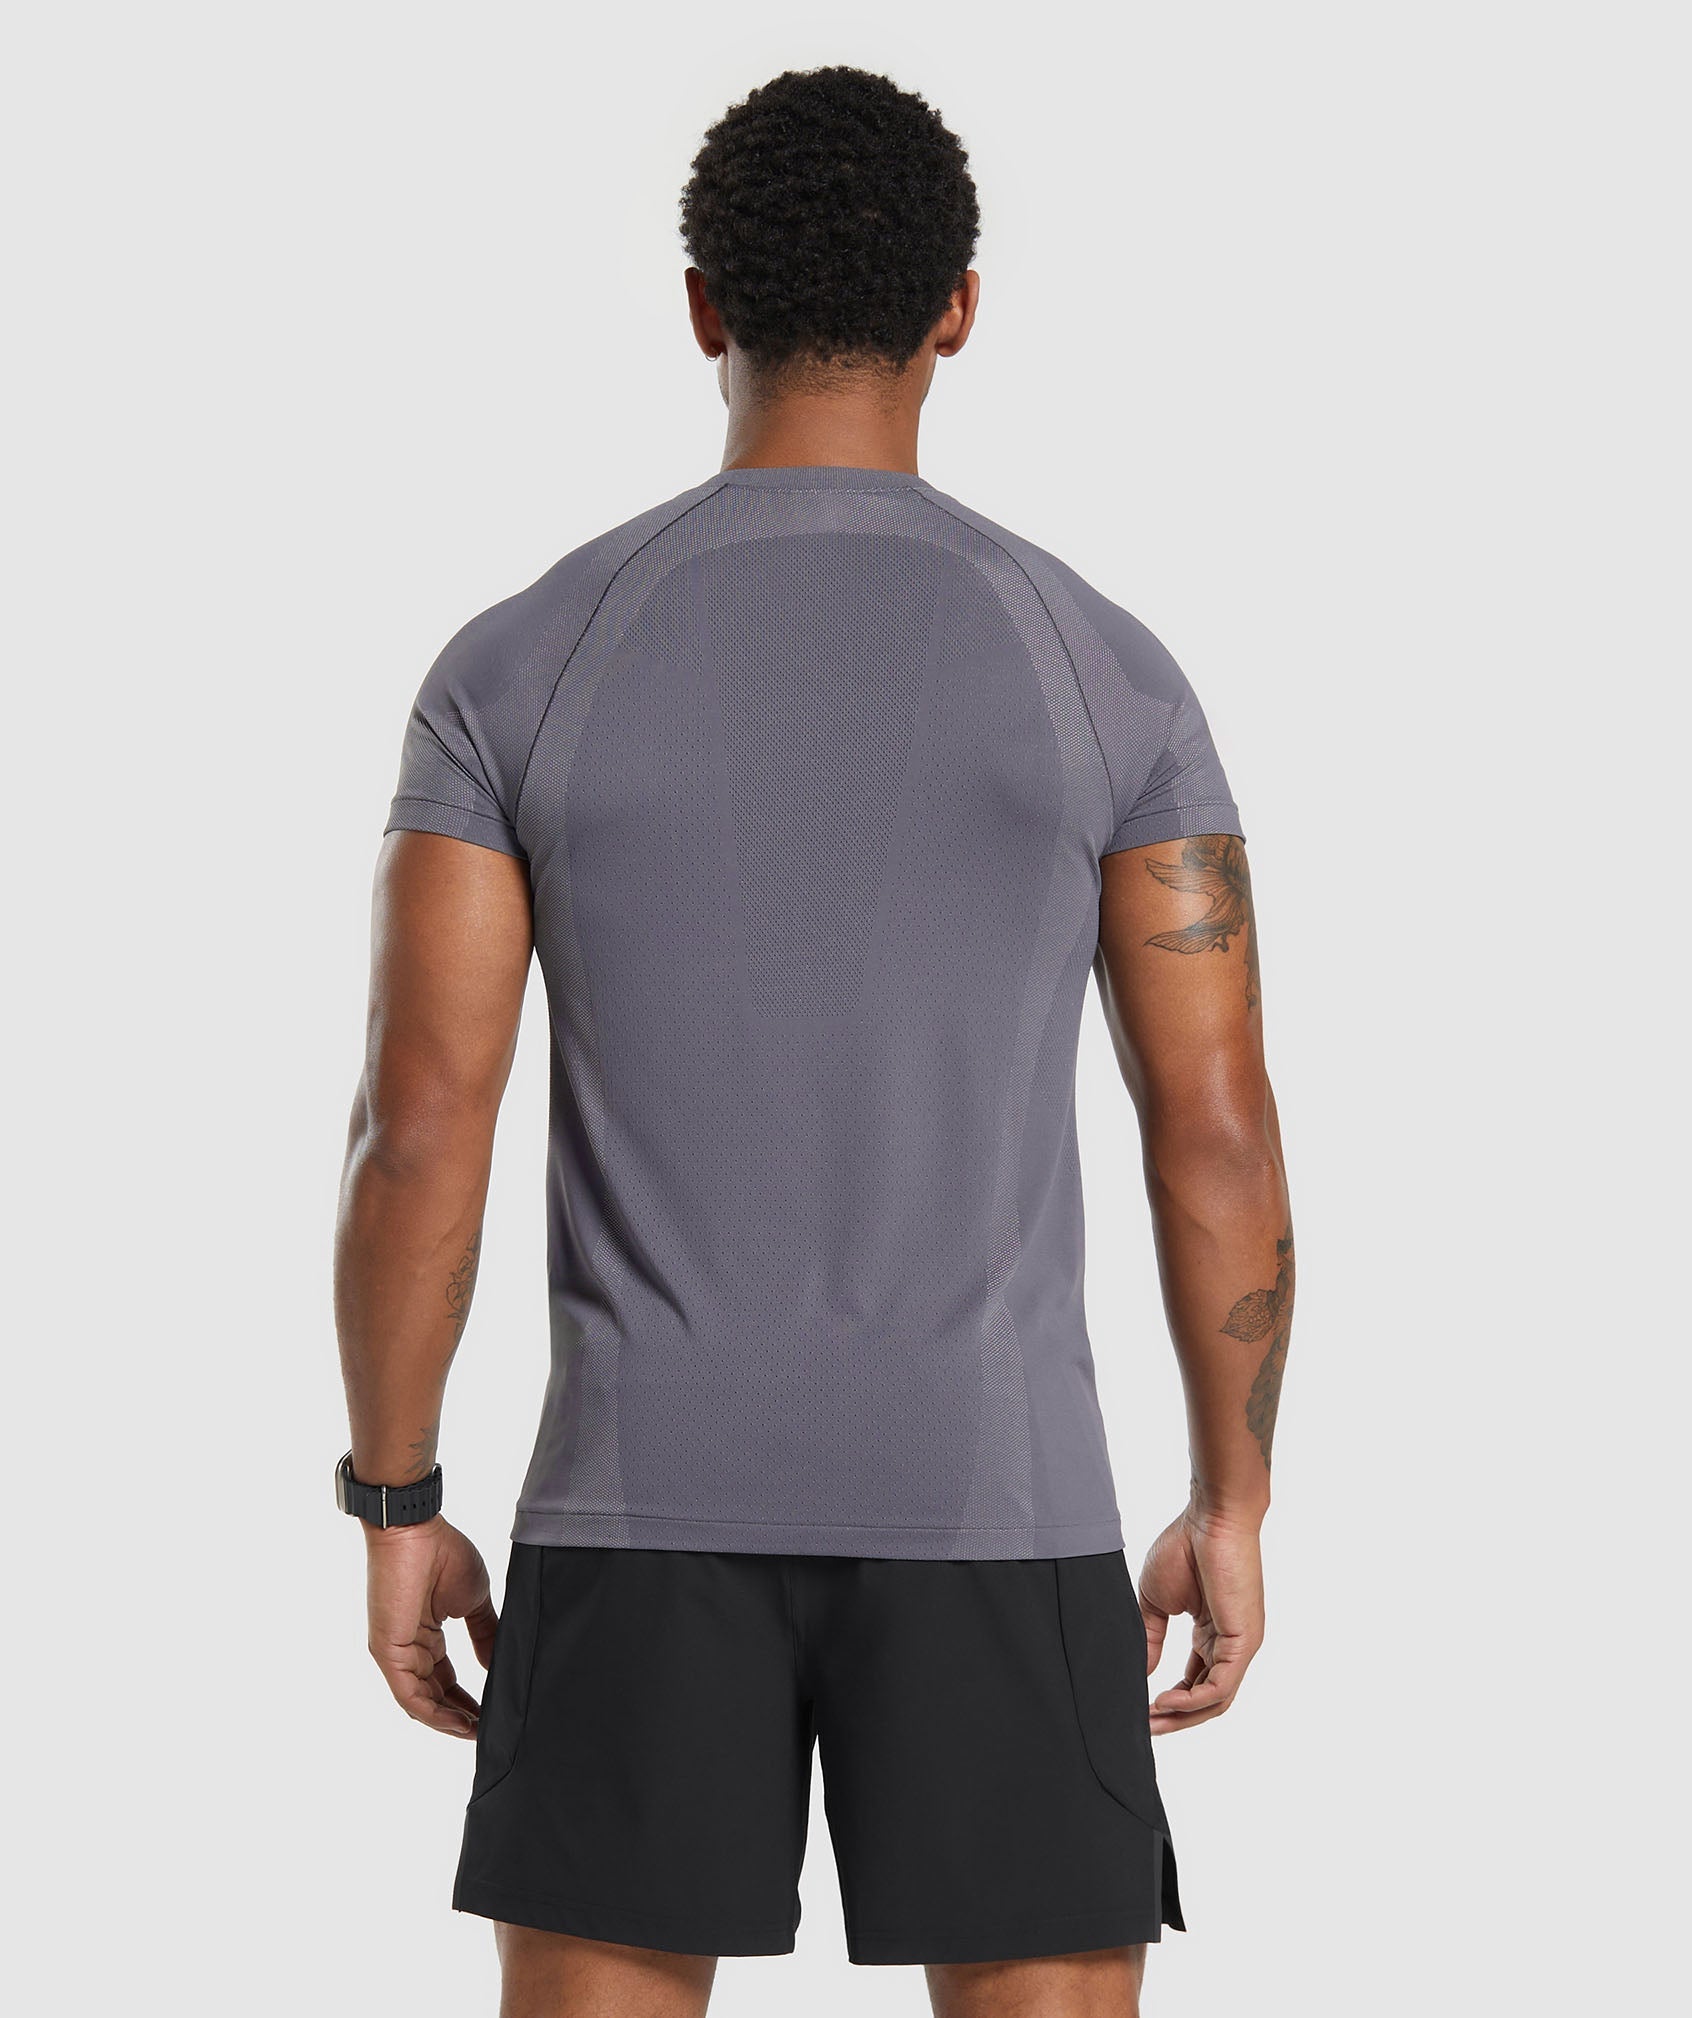 Apex Seamless T-Shirt in Dark Grey/Light Grey - view 2